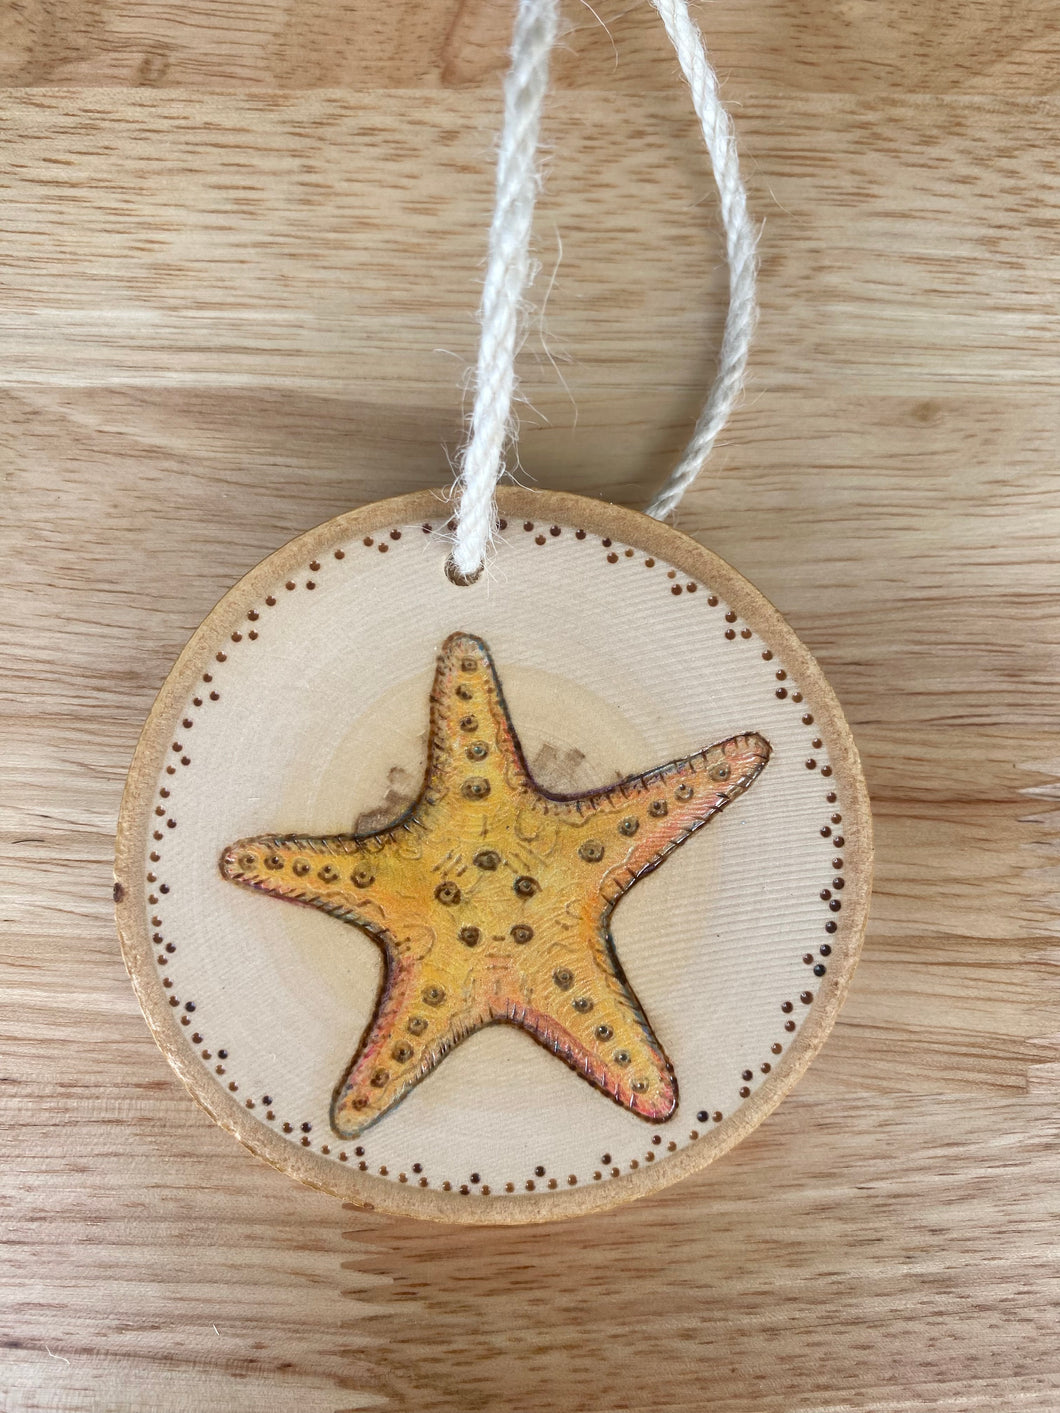 Starfish Wood Burned Ornament